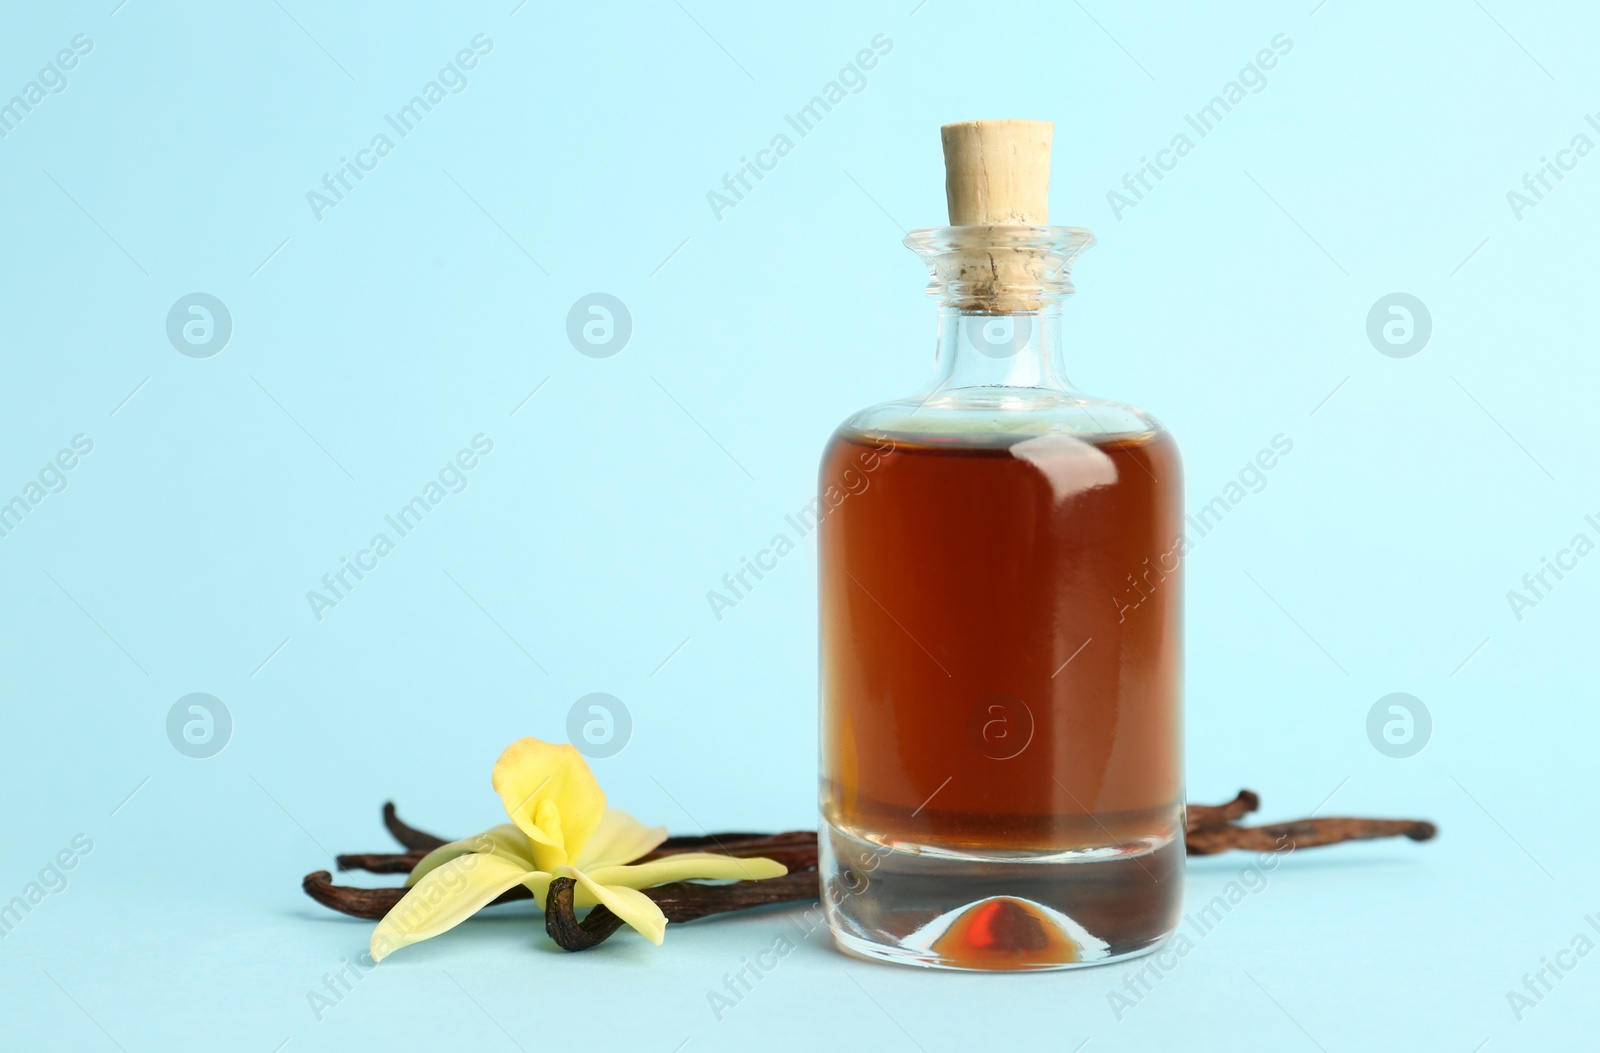 Photo of Aromatic homemade vanilla extract on light blue background